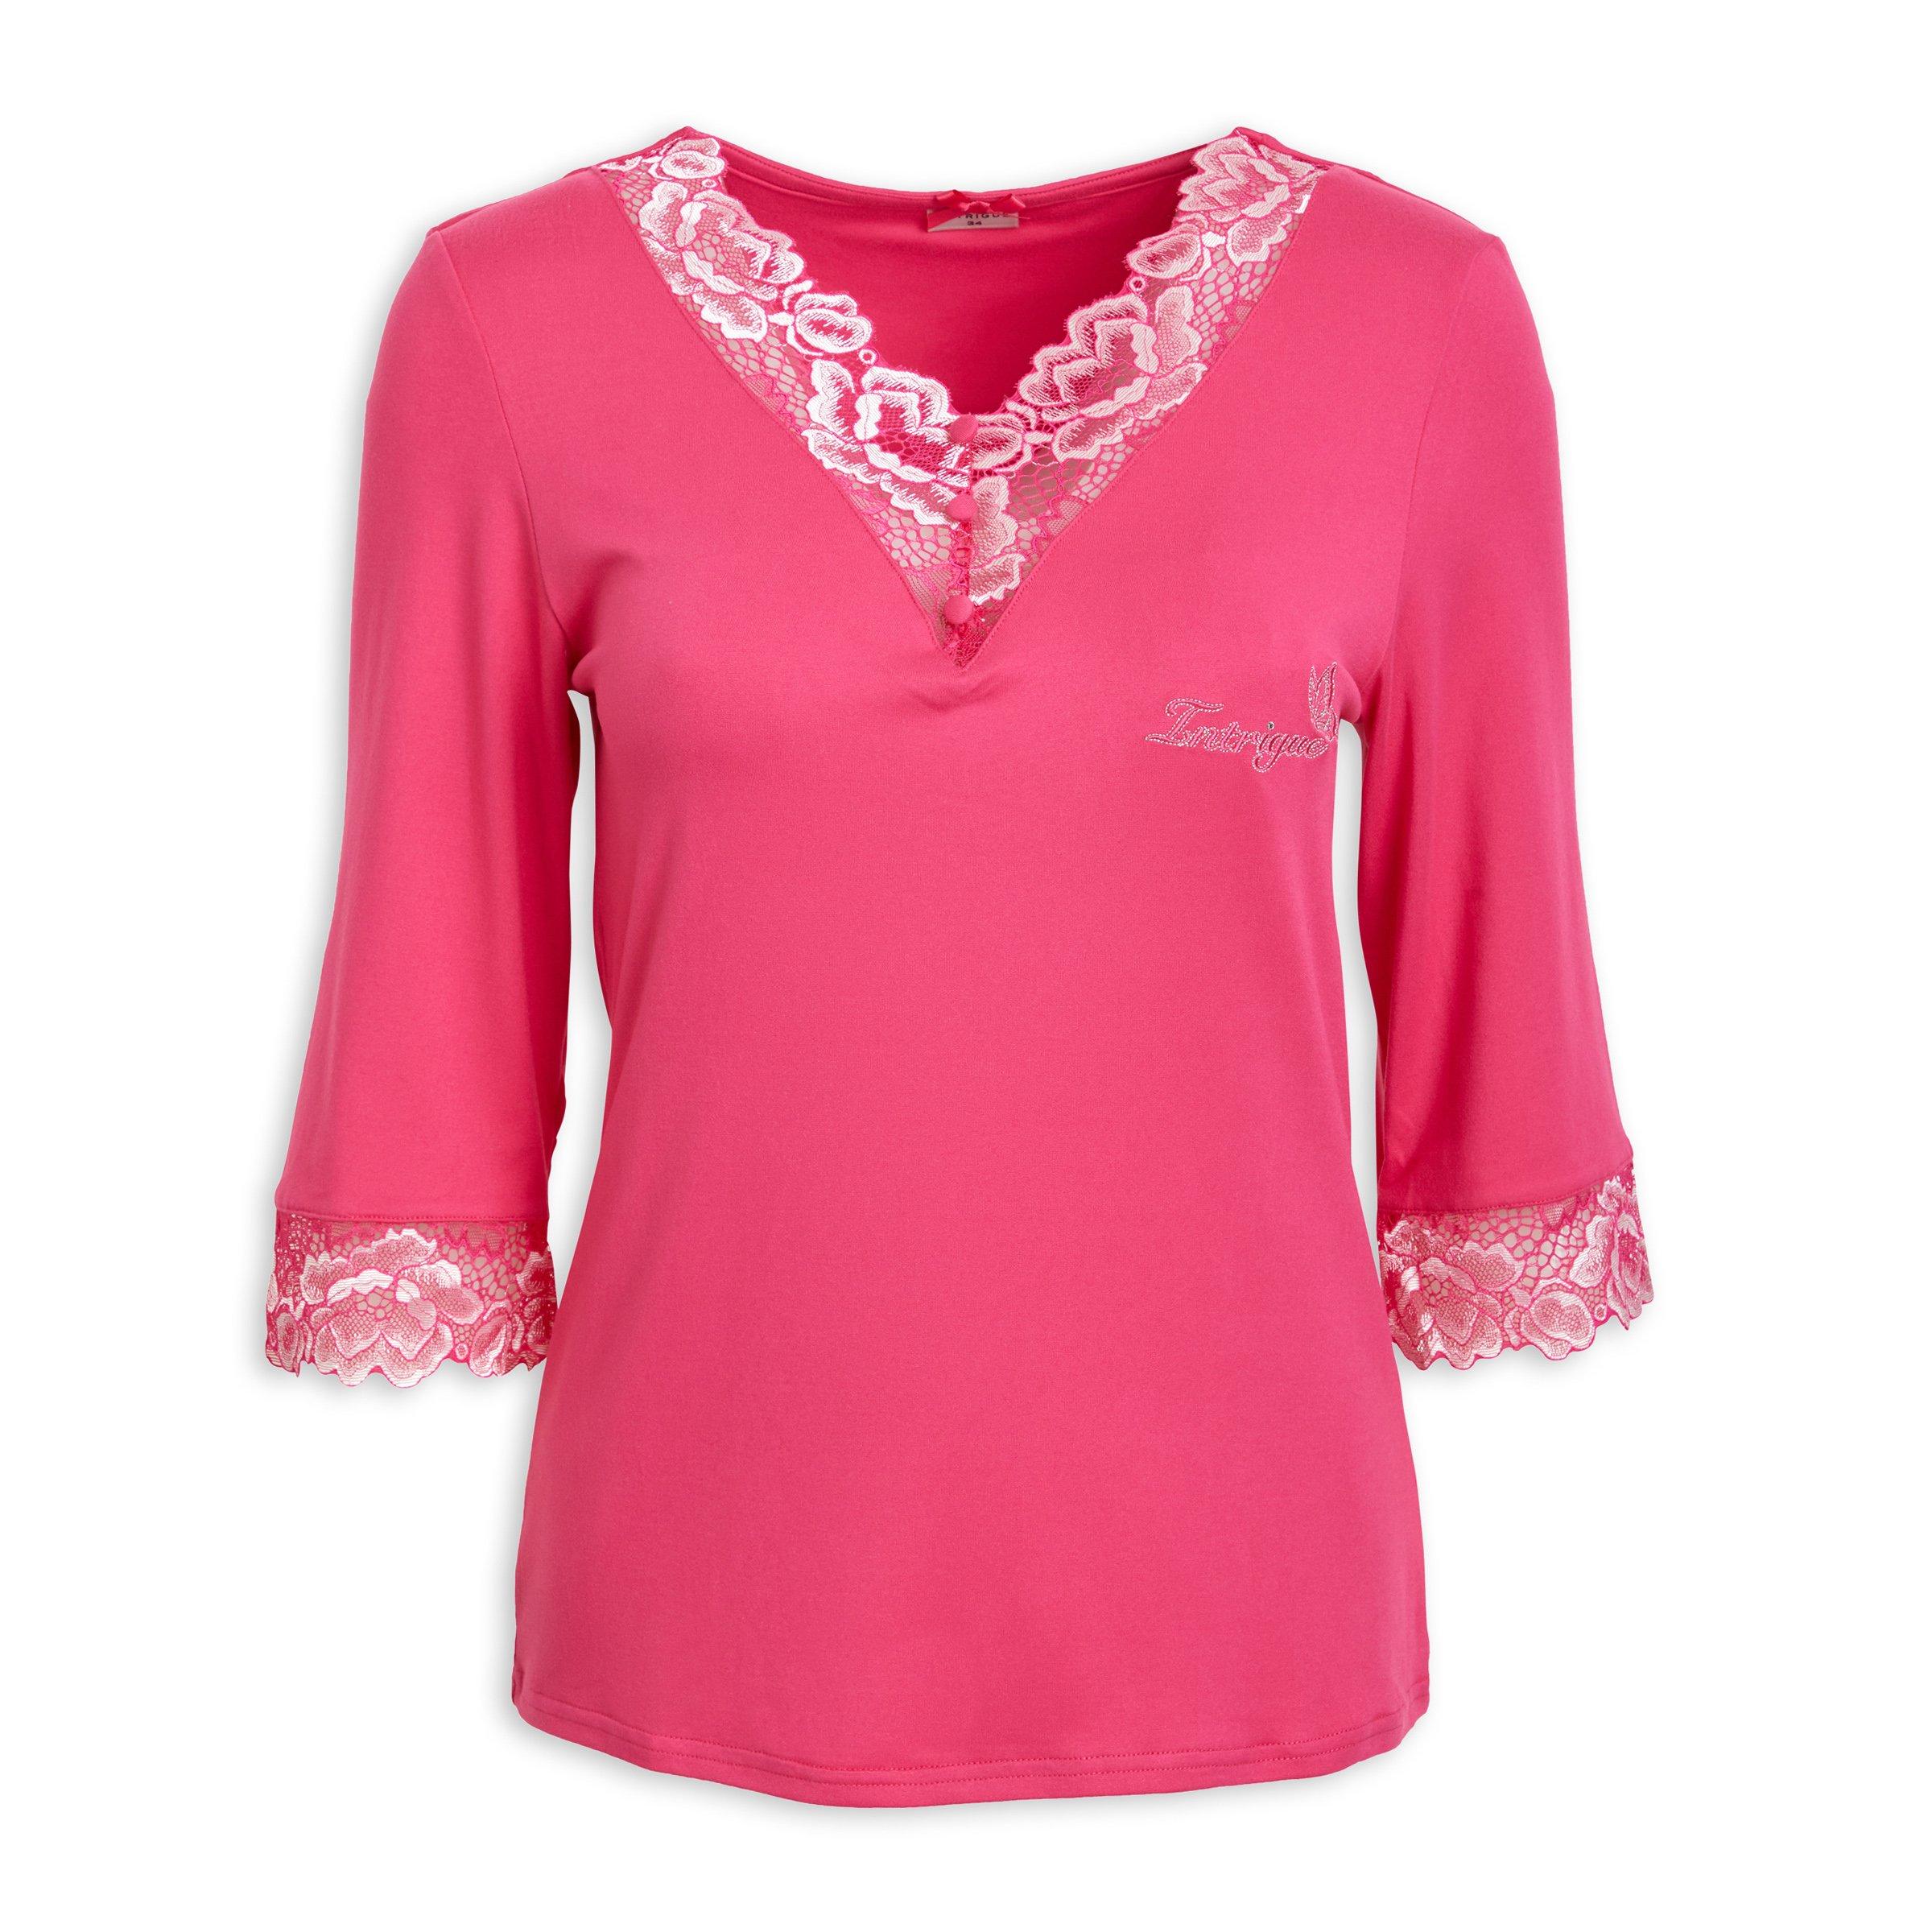 Buy Intrigue Pink PJ Top Online | Truworths